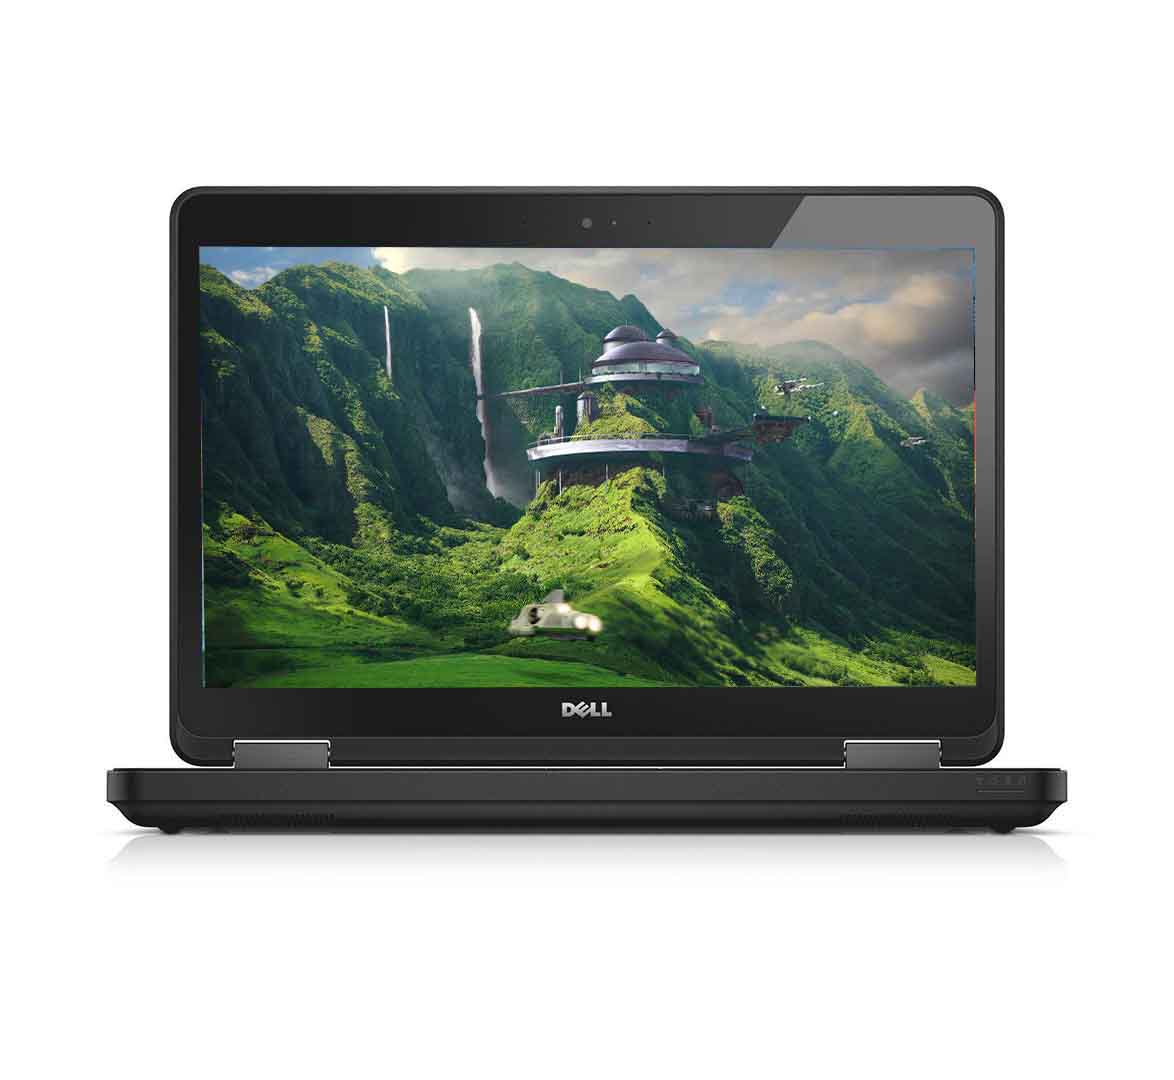 Dell Latitude E5540 Business Laptop, Intel Core i7-4th Generation CPU, 8GB RAM, 500GB HDD, 15.6 inch Display, Windows 10 Pro